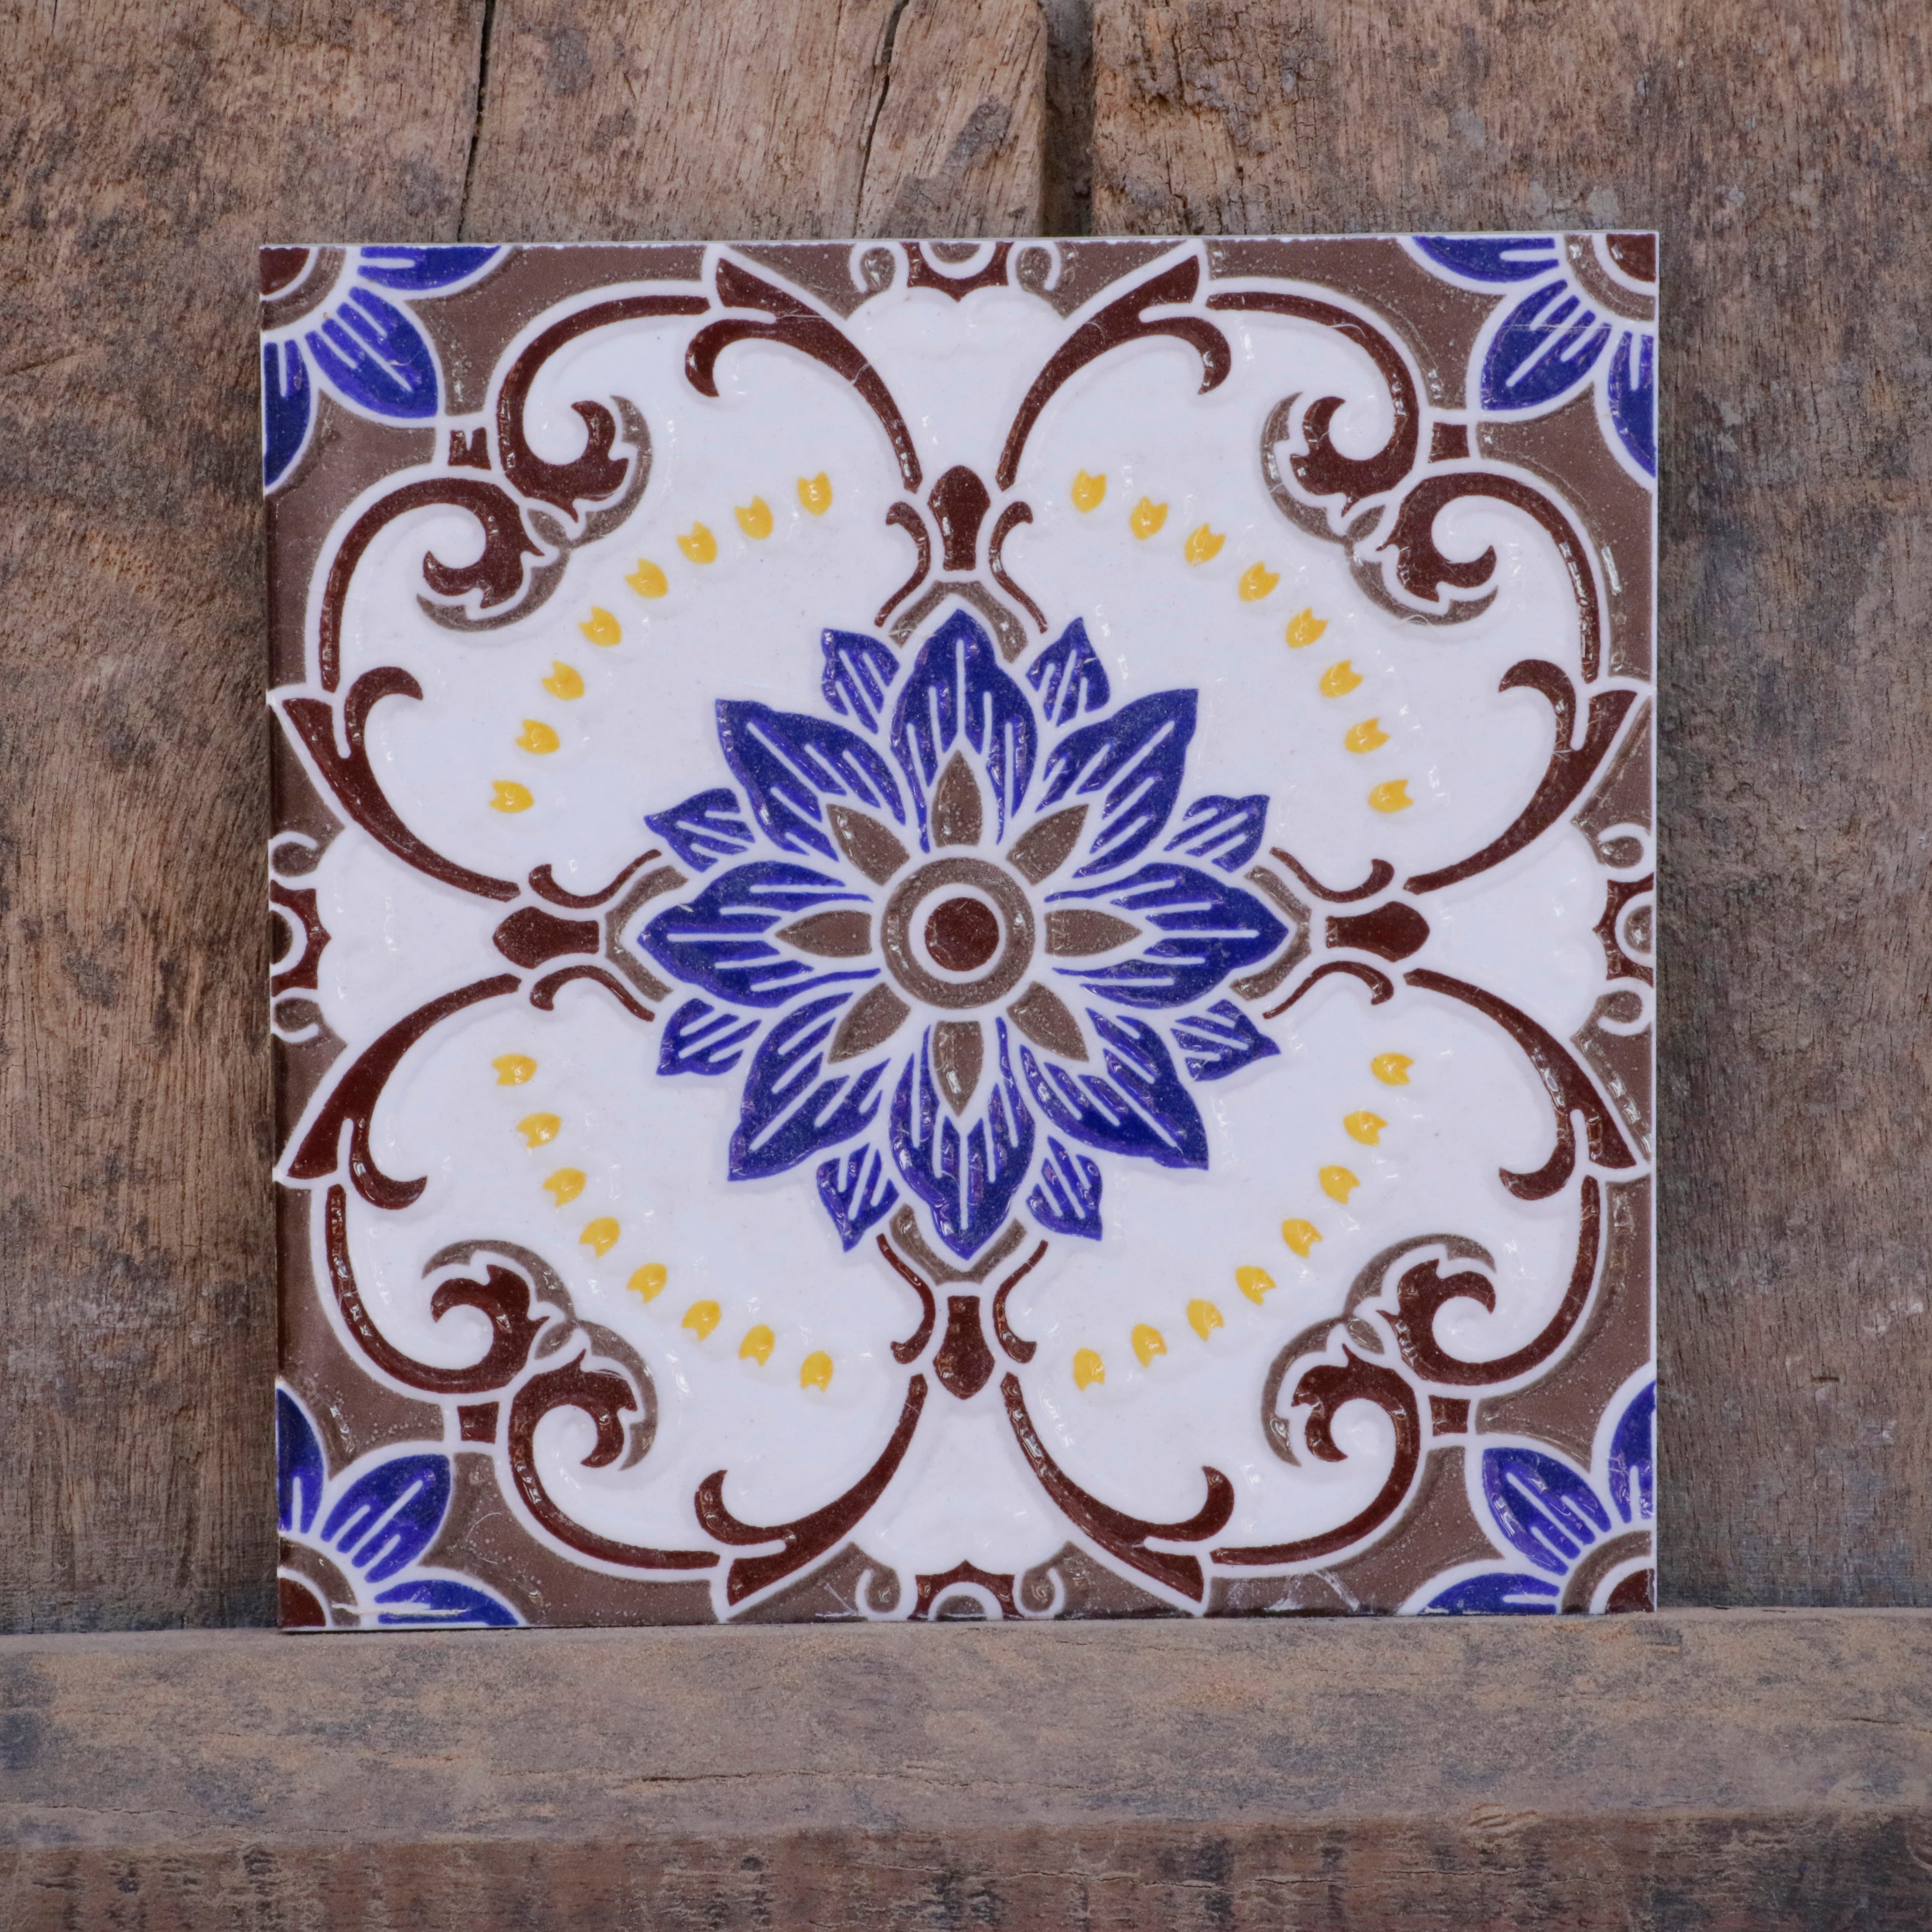 Manmade Traditional Flower Designed Ceramic Tile Ceramic Tile